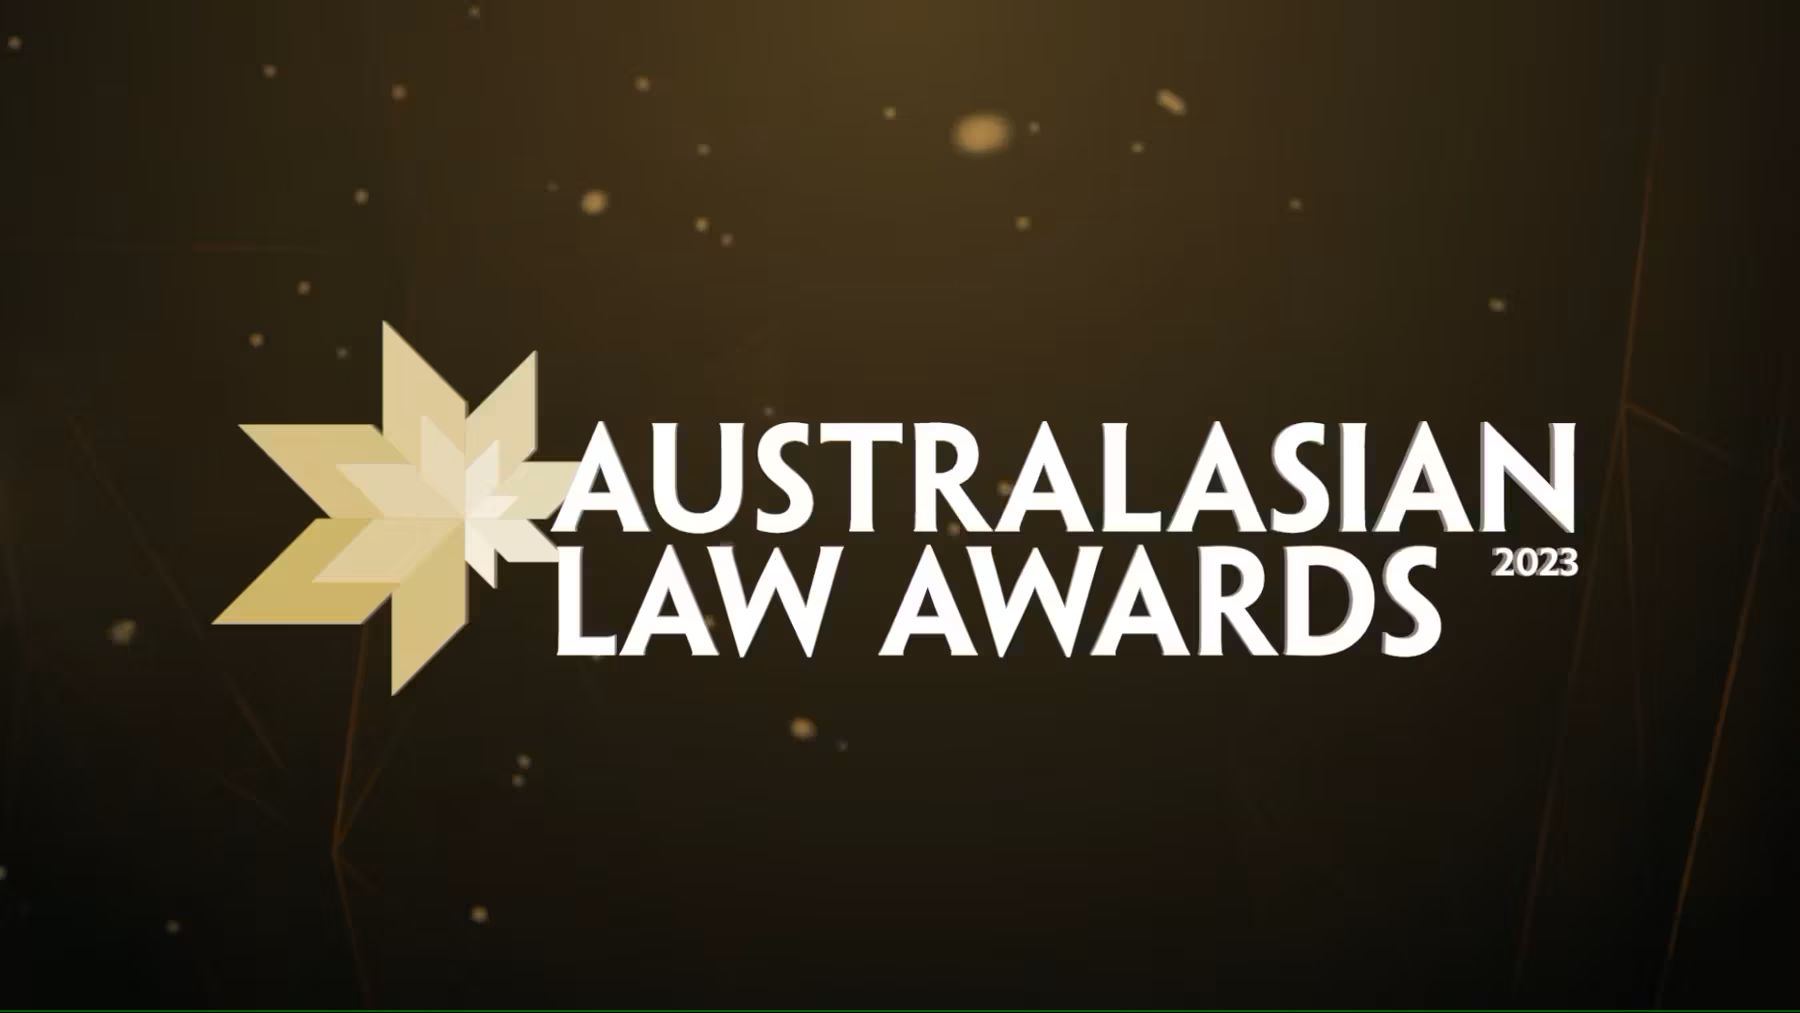 Australasian Law Awards 2023: Highlights